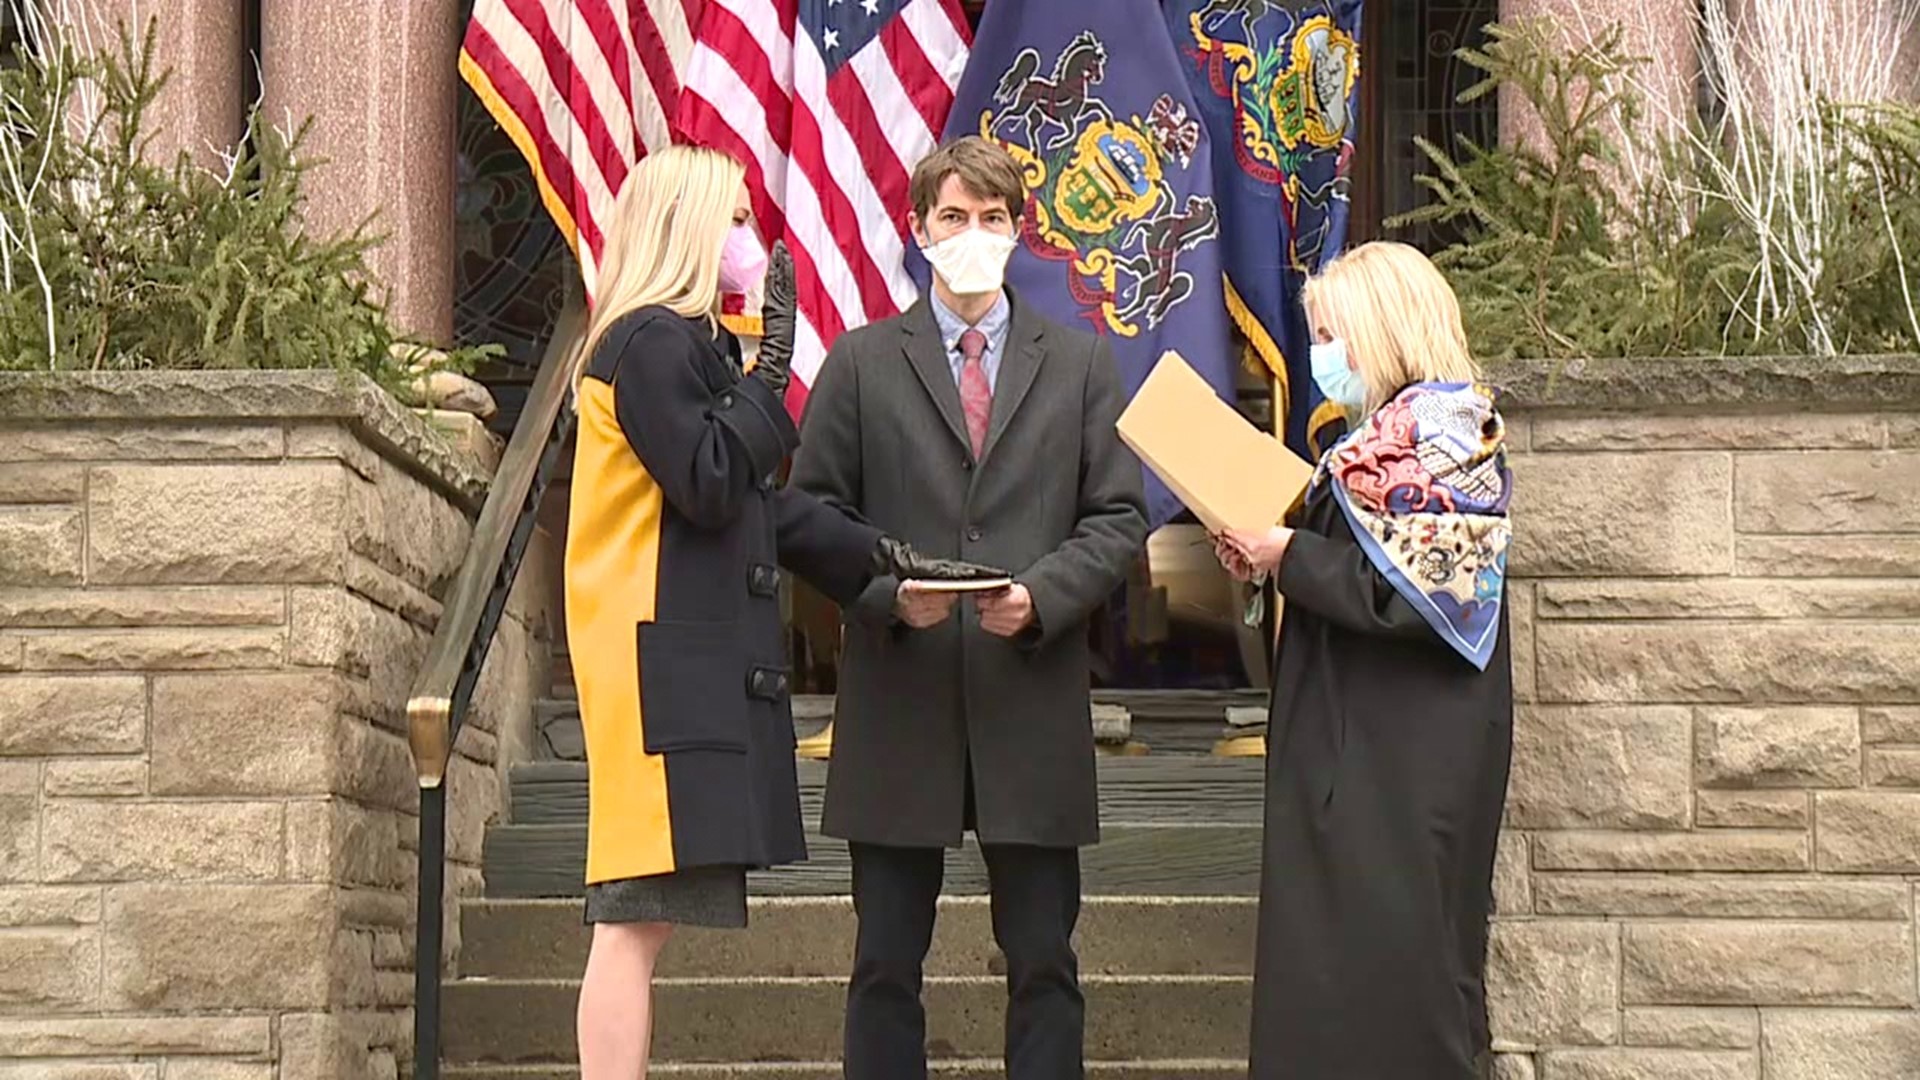 Mayor Cognetti was sworn in at Scranton City Hall on Monday.